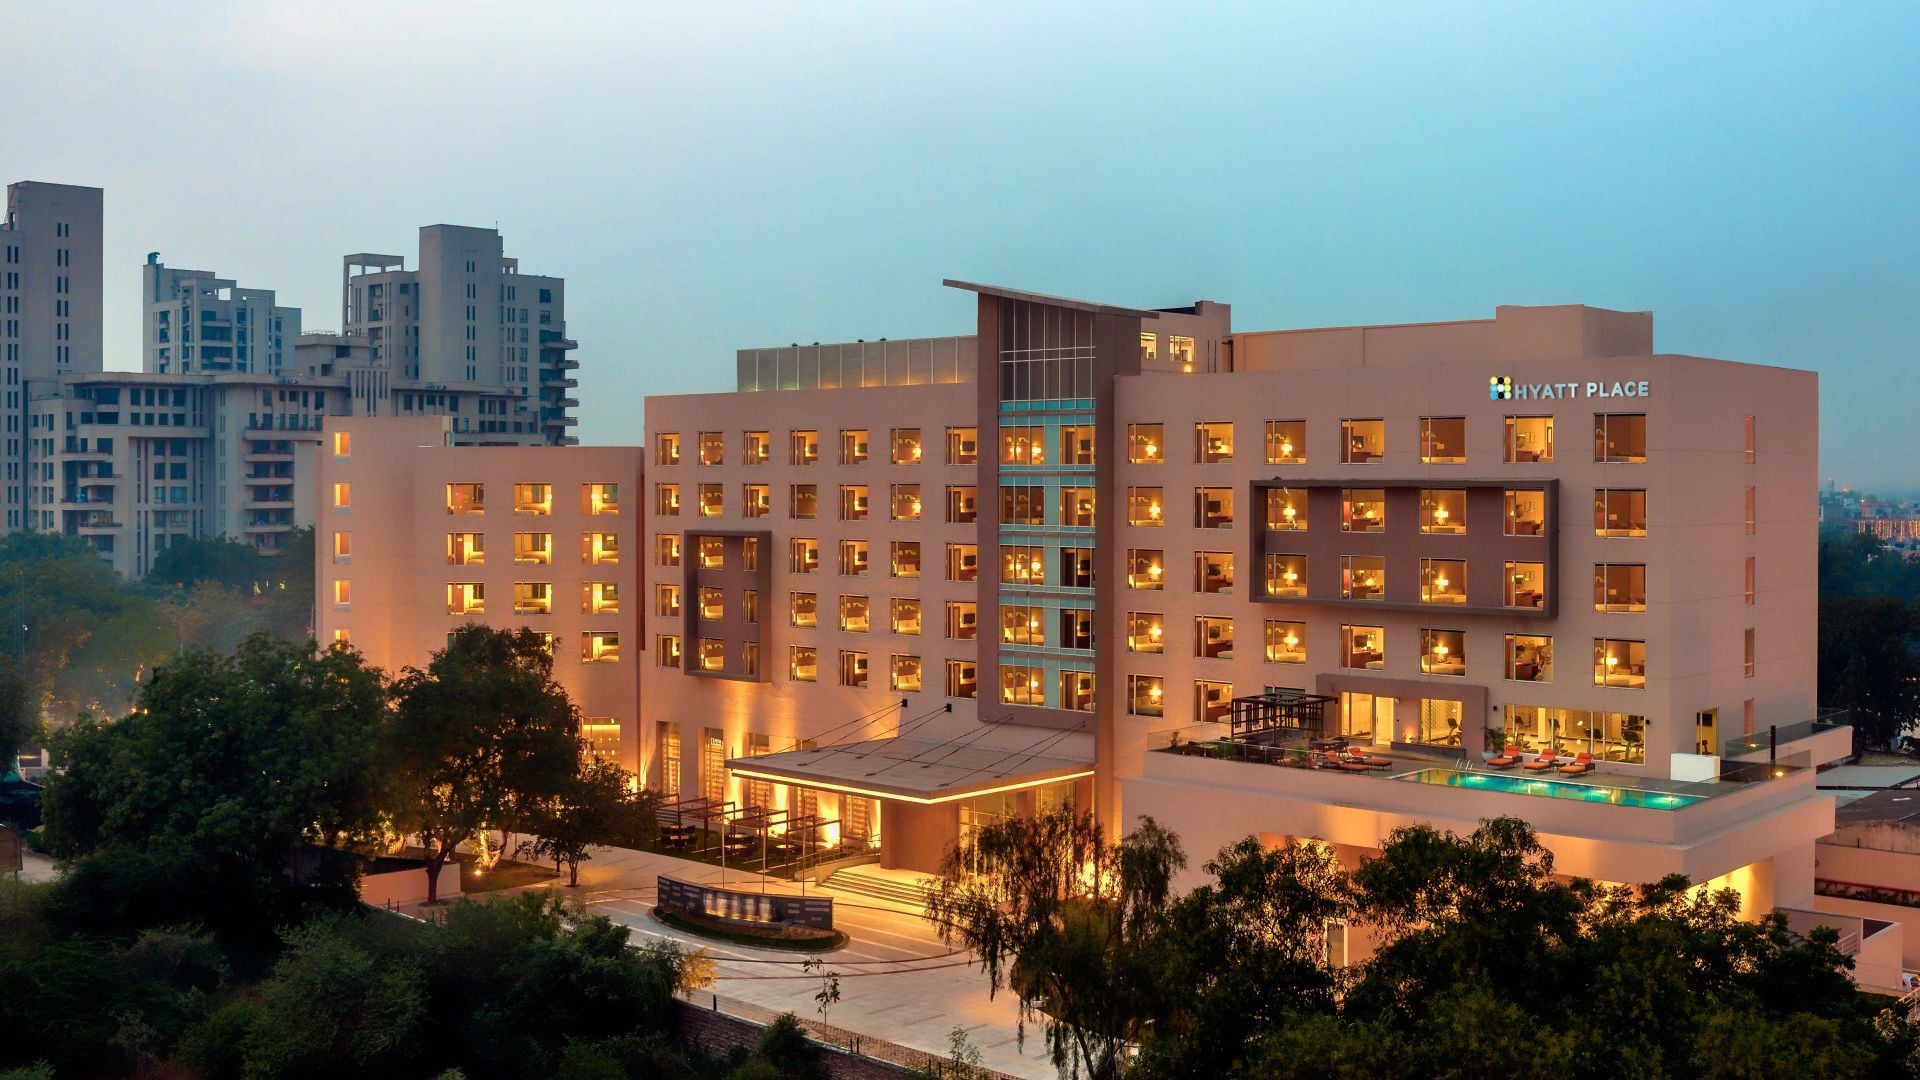 Hotels in Gurgaon, Hotel in Gurgaon near Airport Hyatt Place Gurgaon